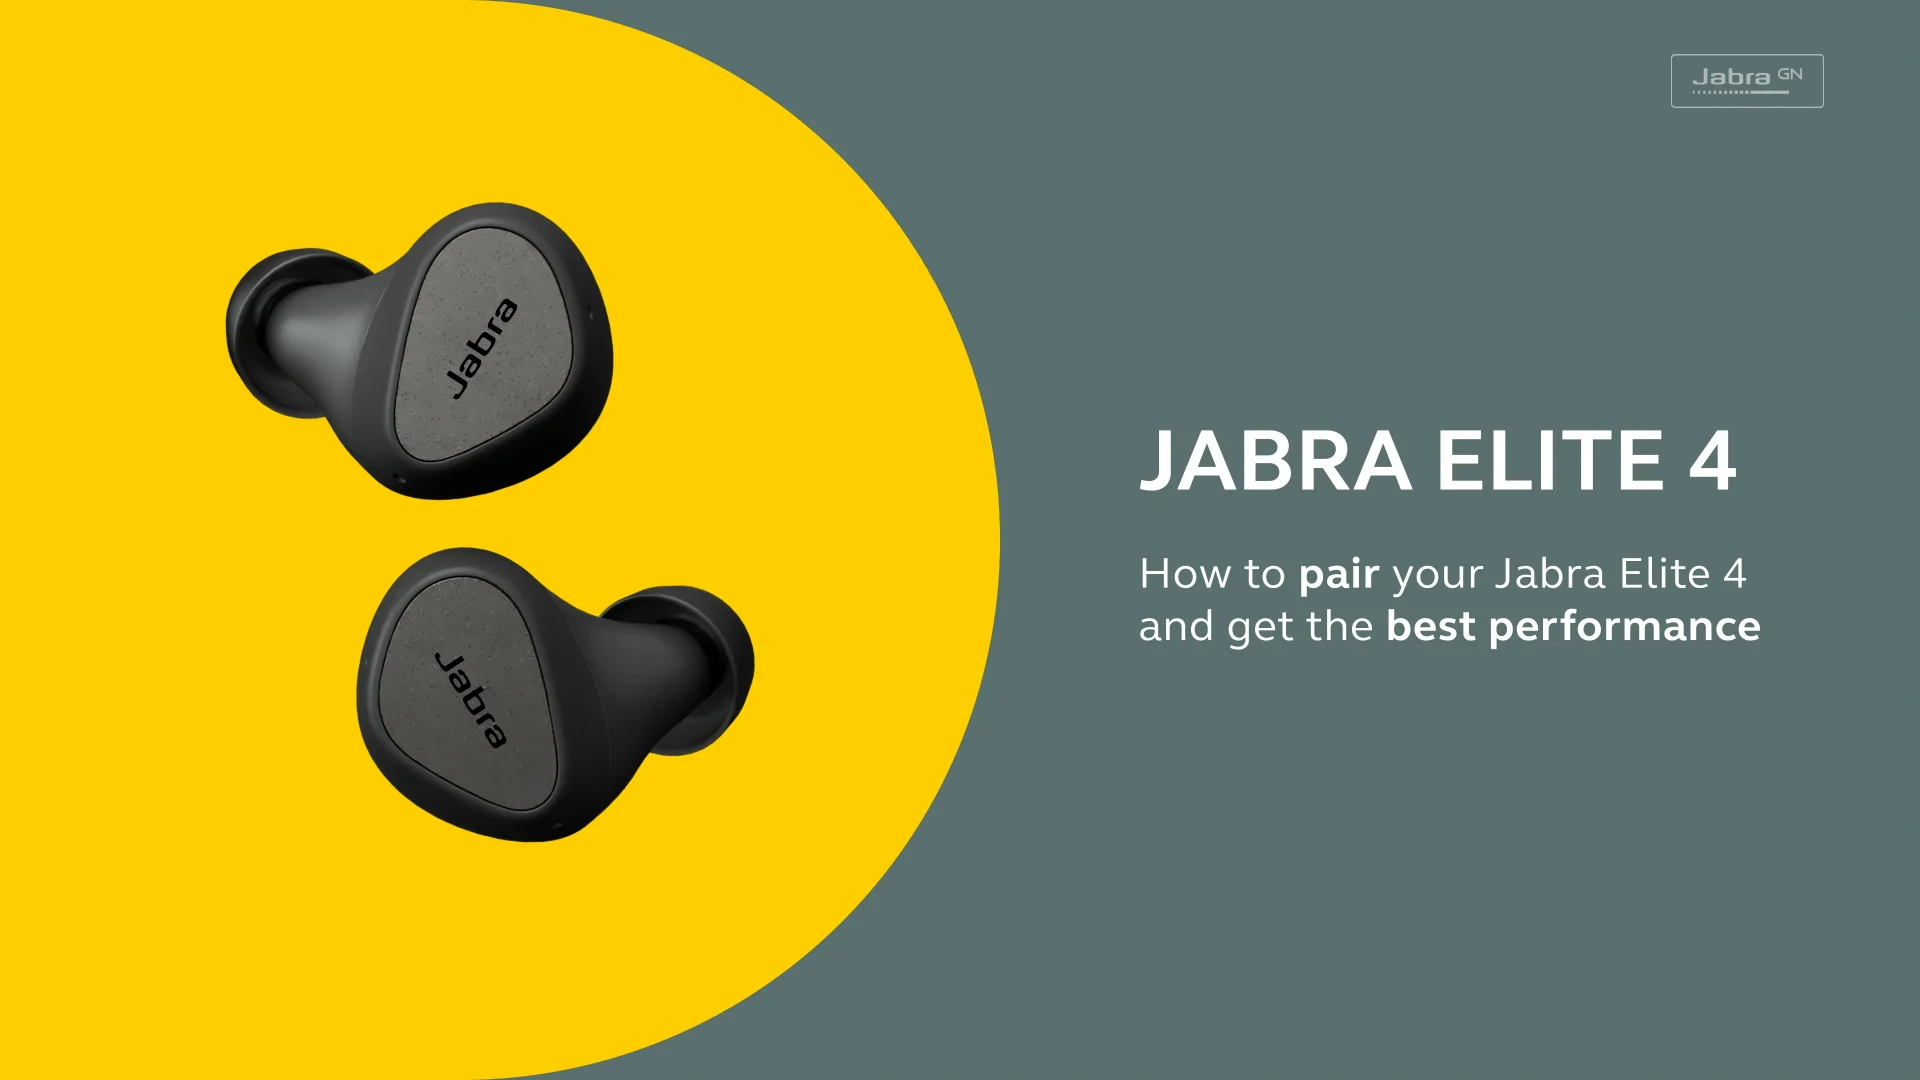 Jabra Elite 4: How to pair & get the best performance